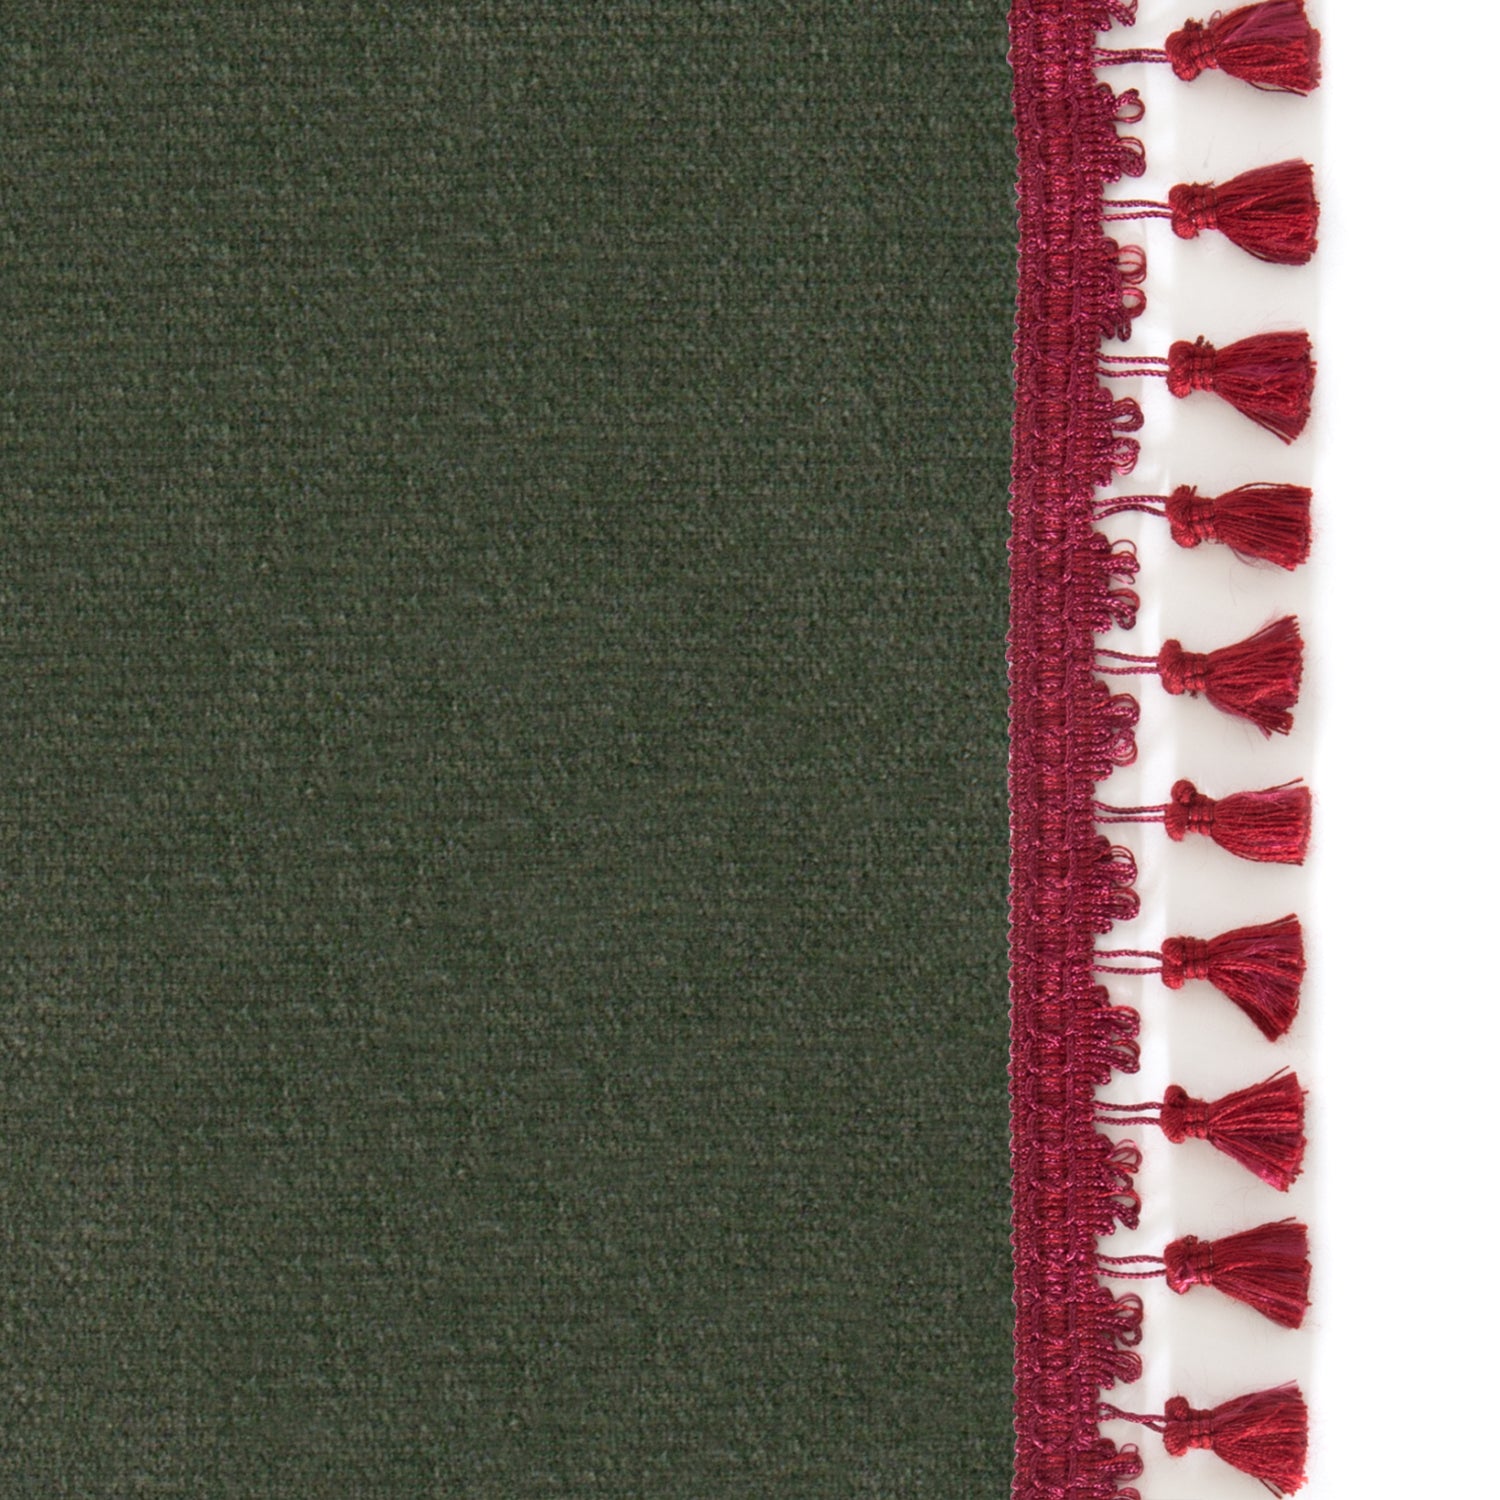 Upclose picture of Fern Velvet custom Fern Greencurtain with fern raspberry tassel trim